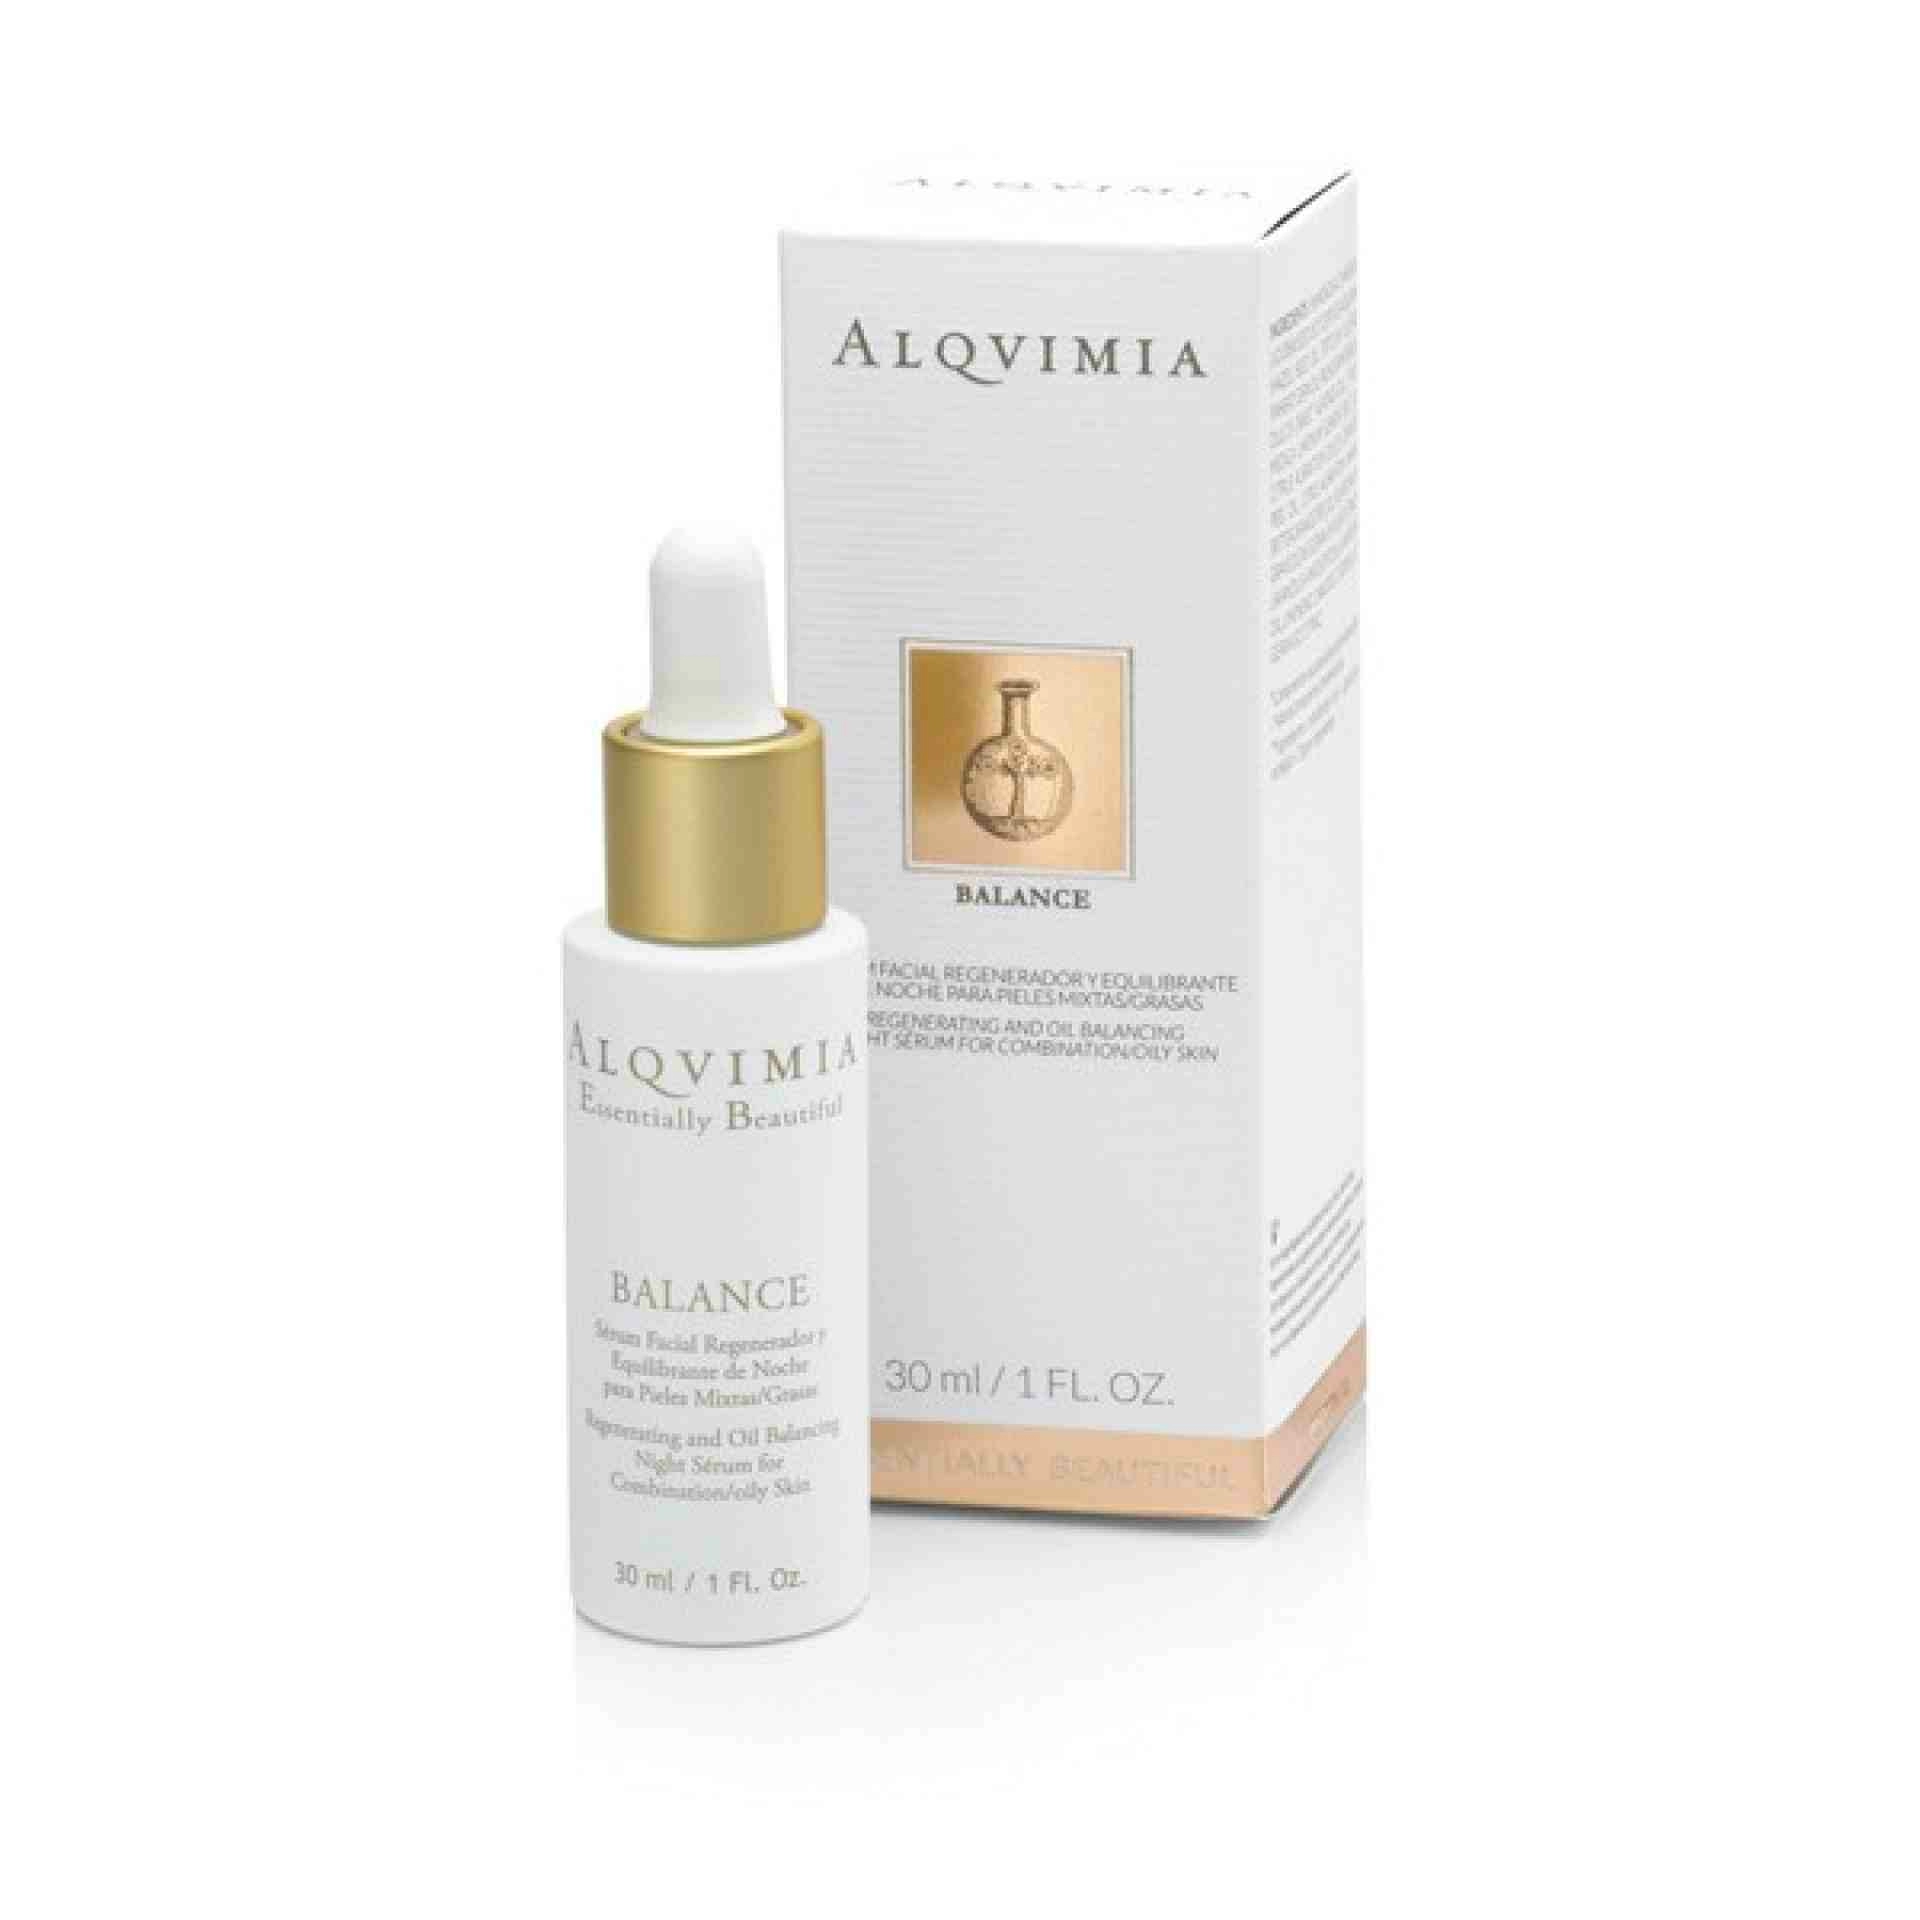 Balance | Sérum regenerador para pieles mixtas 30ml - Essentially Beautiful - Alqvimia ®